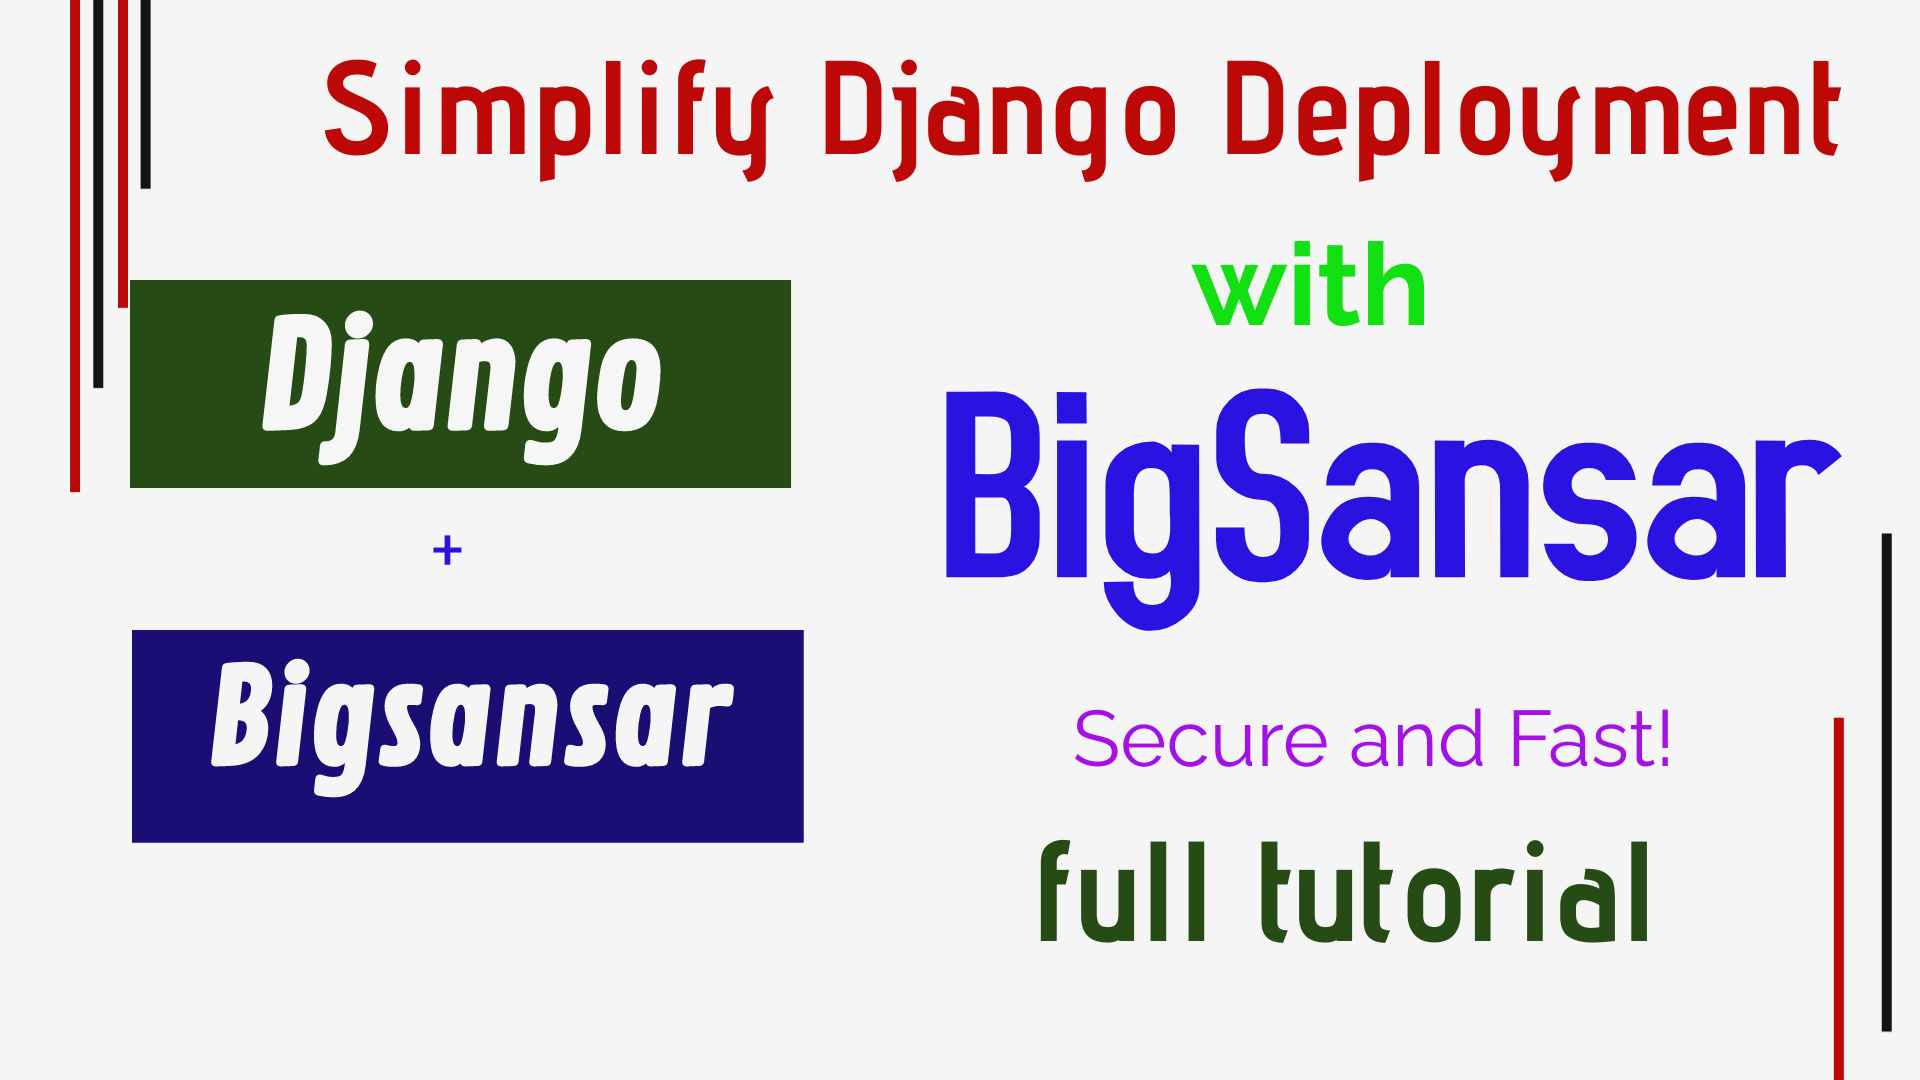 Simplify Django Deployment with BigSansar | Secure and Fast!| Bigsansar